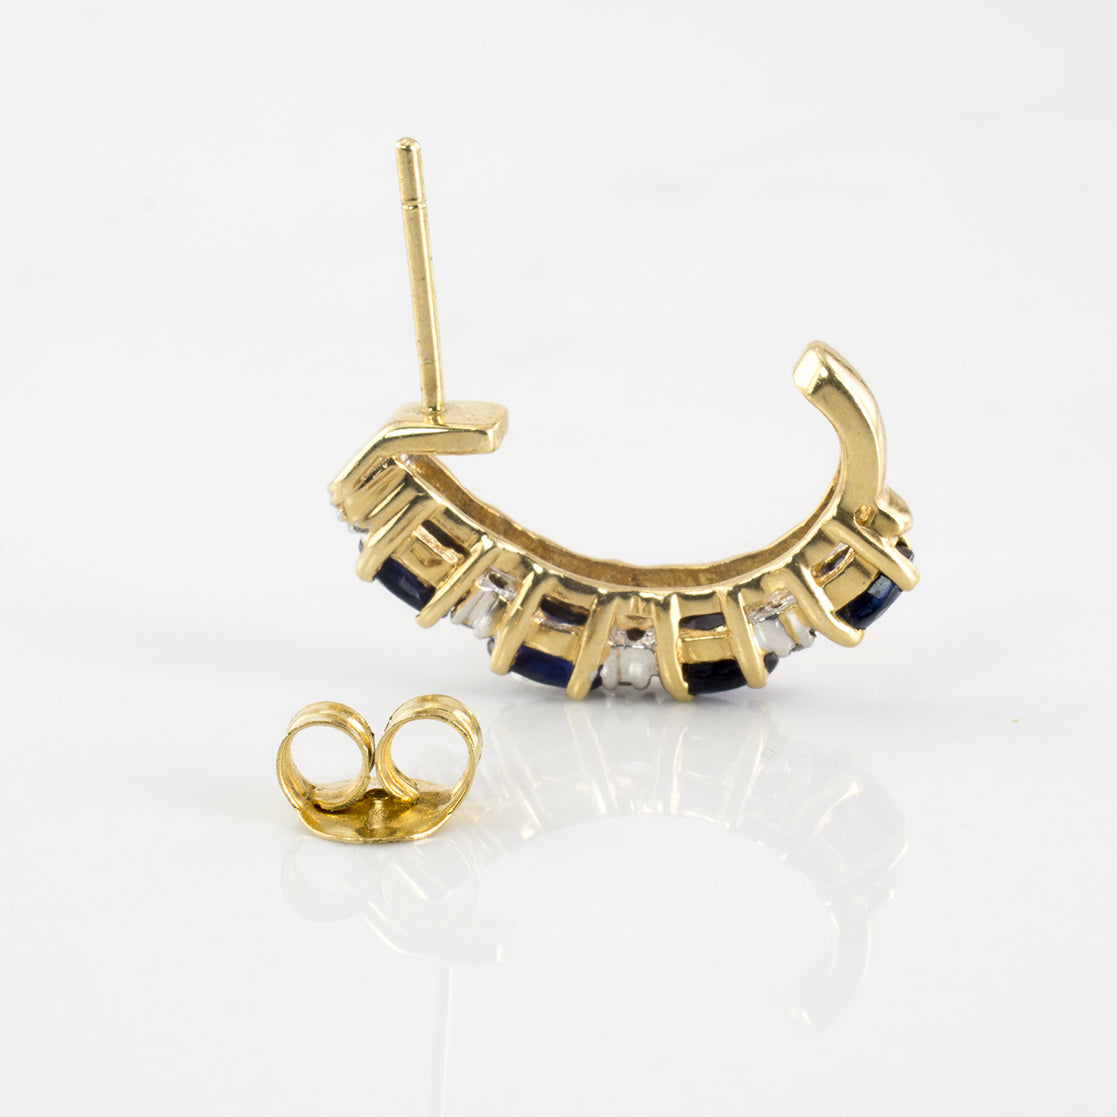 Diamond & Sapphire Half Hoop Stud Earrings | 1.50 ctw Sapphires, 0.06 ctw Diamonds